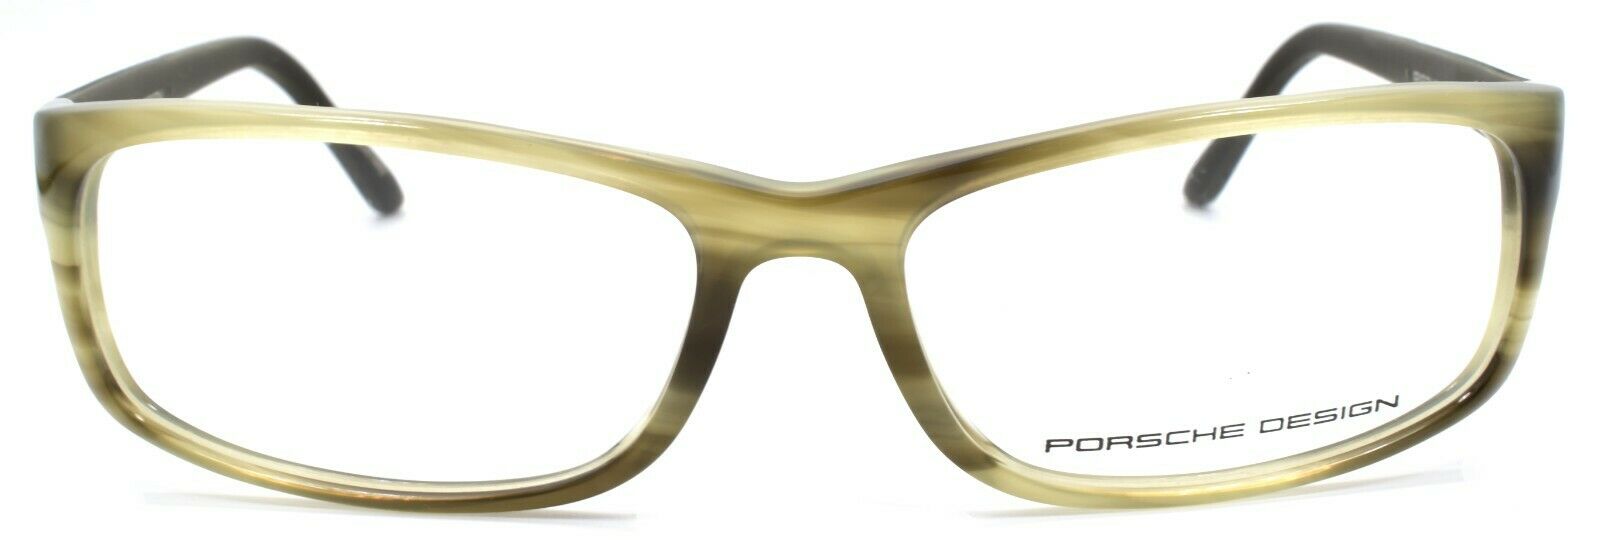 2-Porsche Design P8243 D Women's Eyeglasses Frames 54-15-135 Olive-4046901711573-IKSpecs